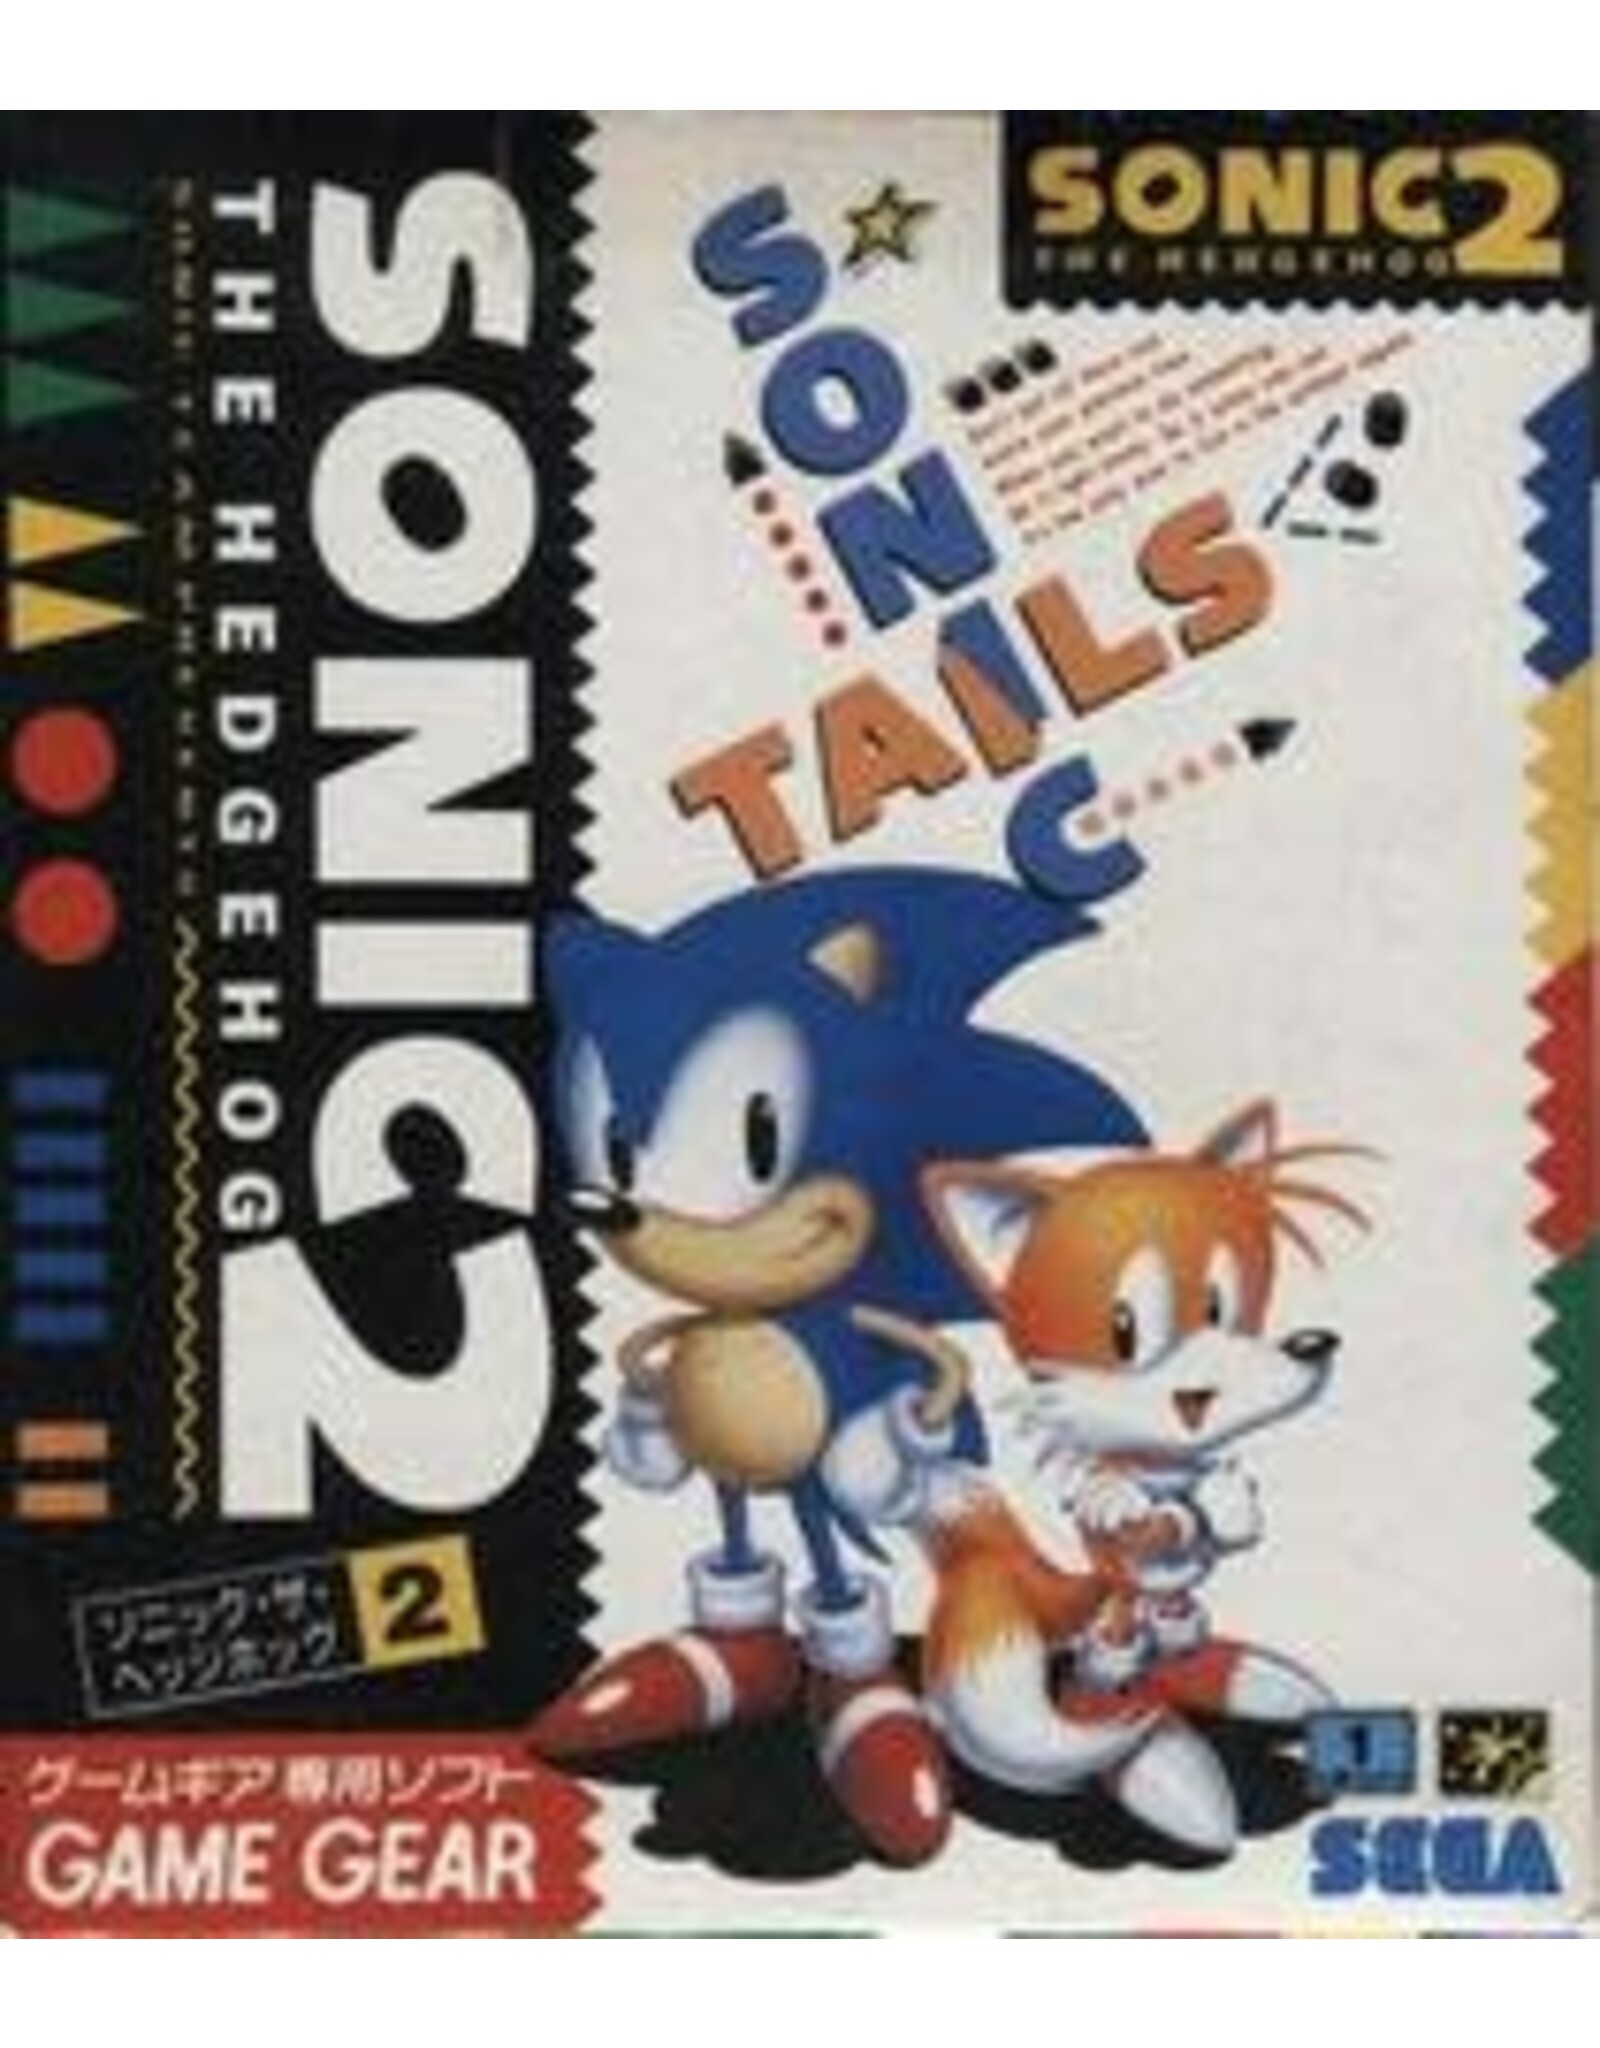 Sega Game Gear Sonic the Hedgehog 2 (Cart Only, JP Import)